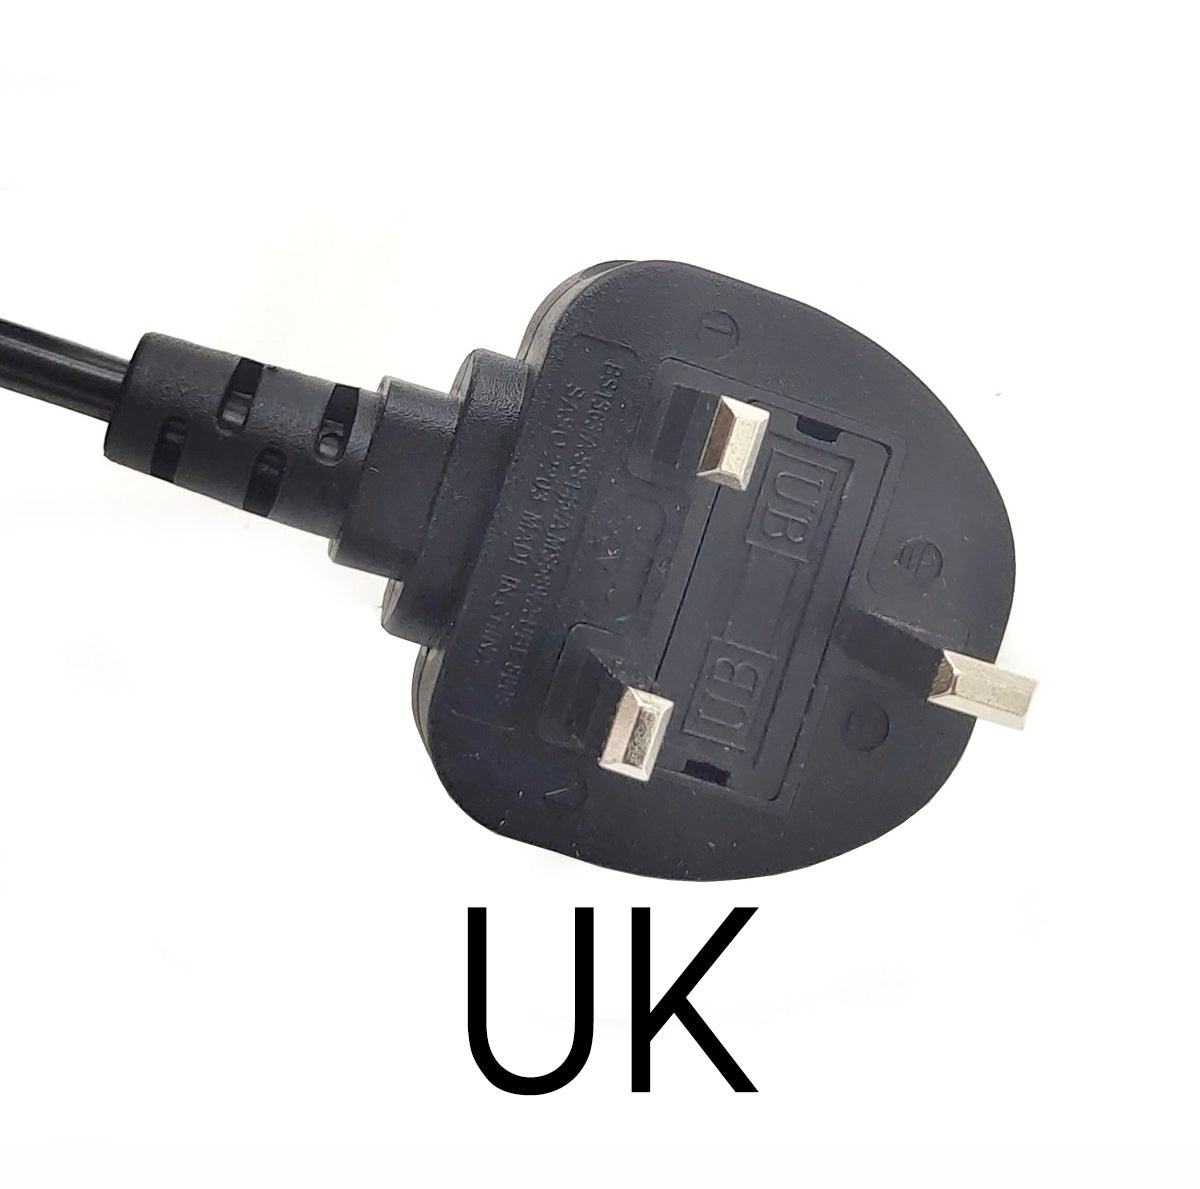 Soldering Iron 90W Adjustable Temp with Digital Display & 5 Soldering Tip US UK EU Plug - WPL RC Official Store